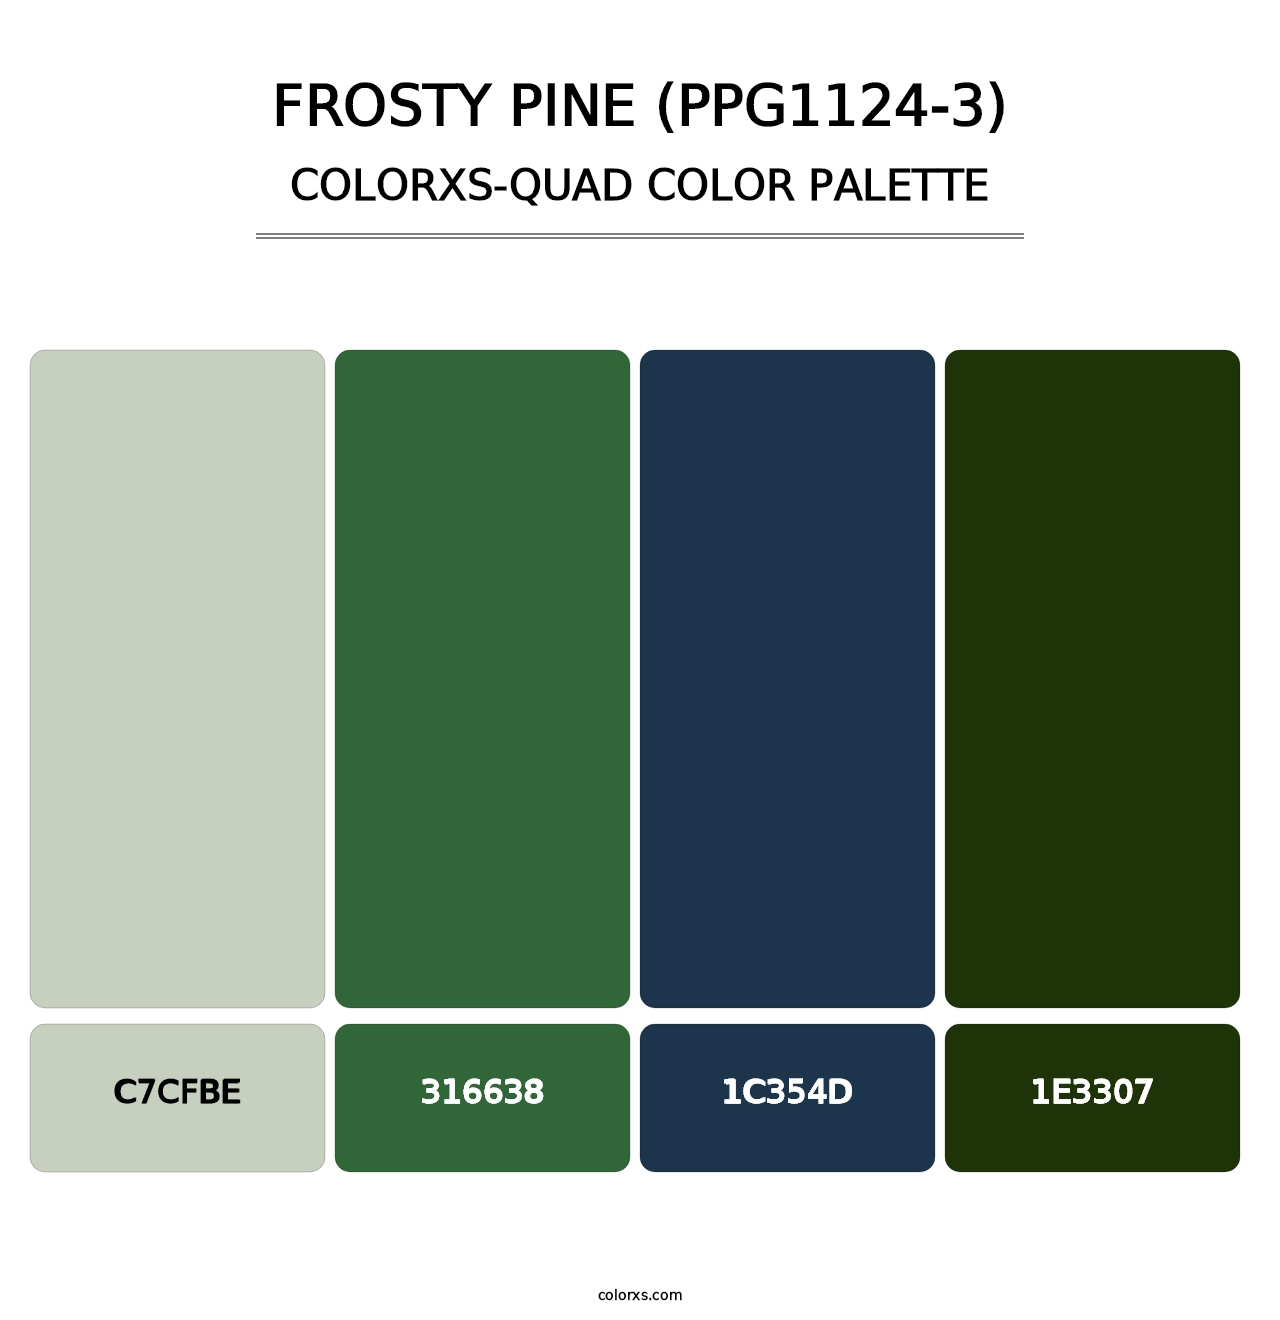 Frosty Pine (PPG1124-3) - Colorxs Quad Palette